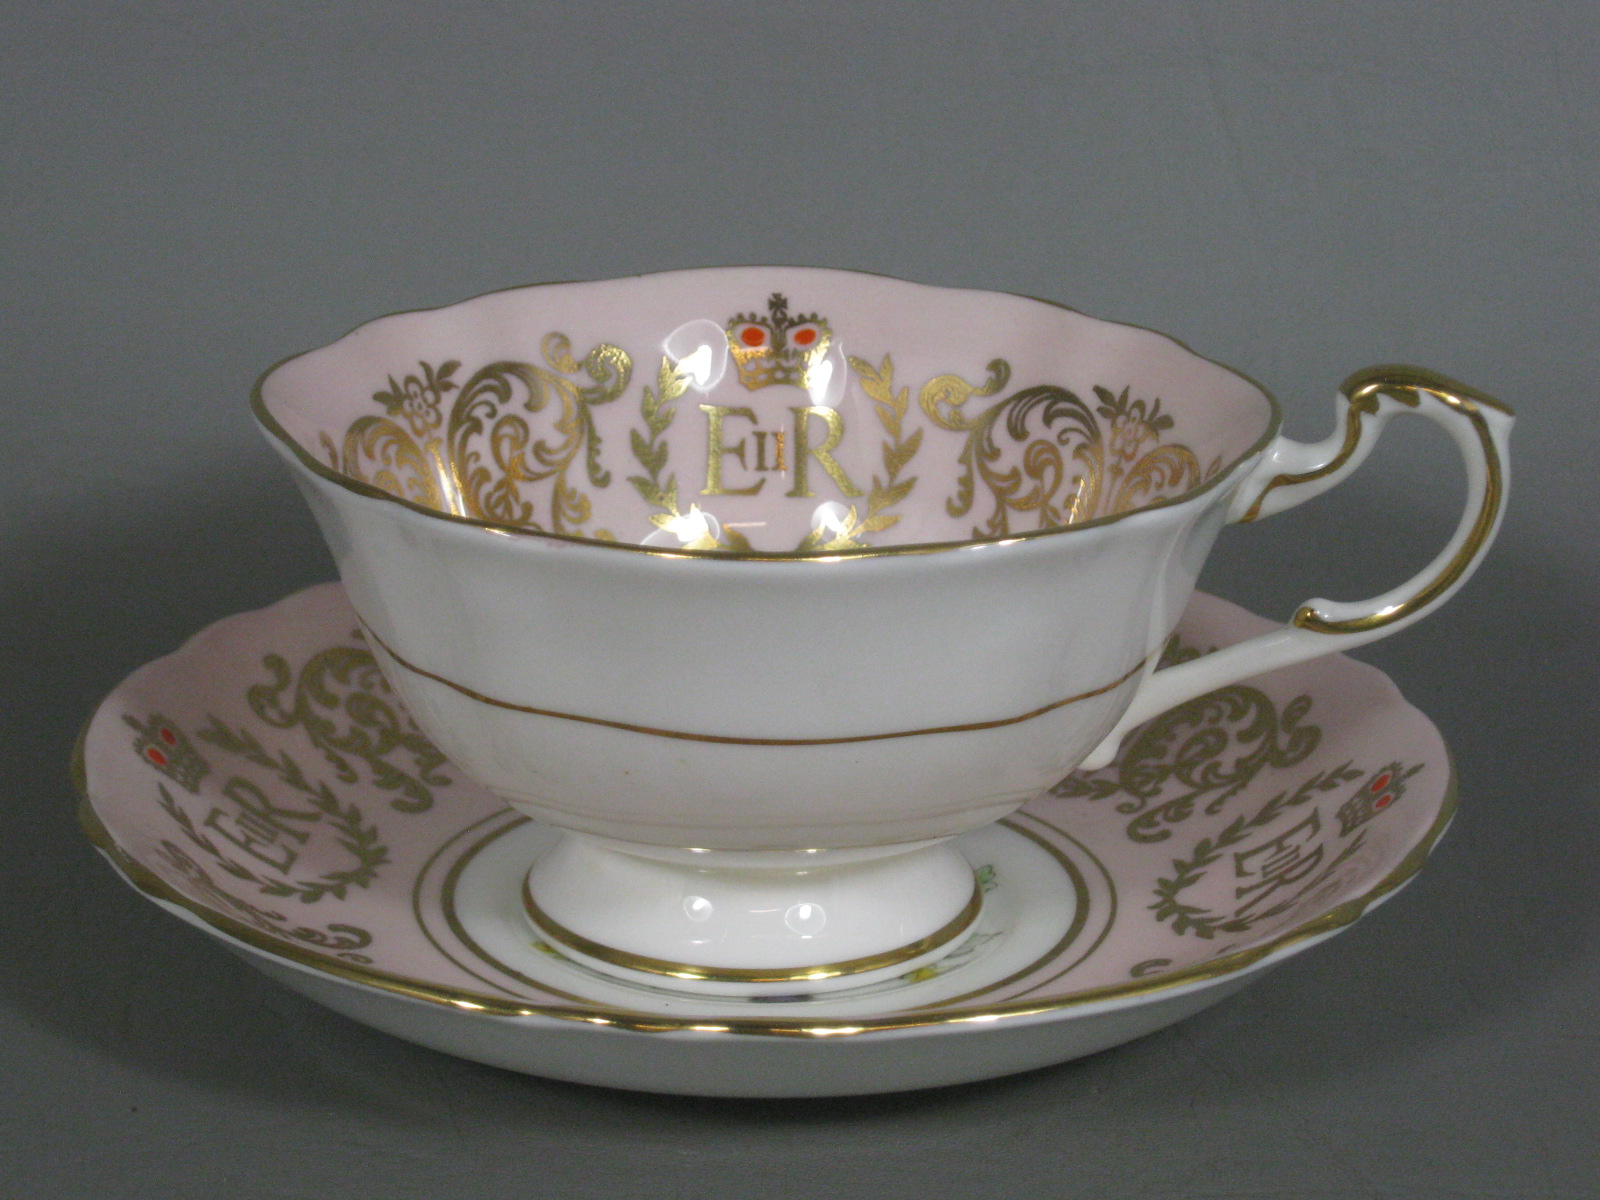 2 Paragon Bone China Queen Elizabeth II 1953 Coronation Tea Cups Teacups Saucers 2